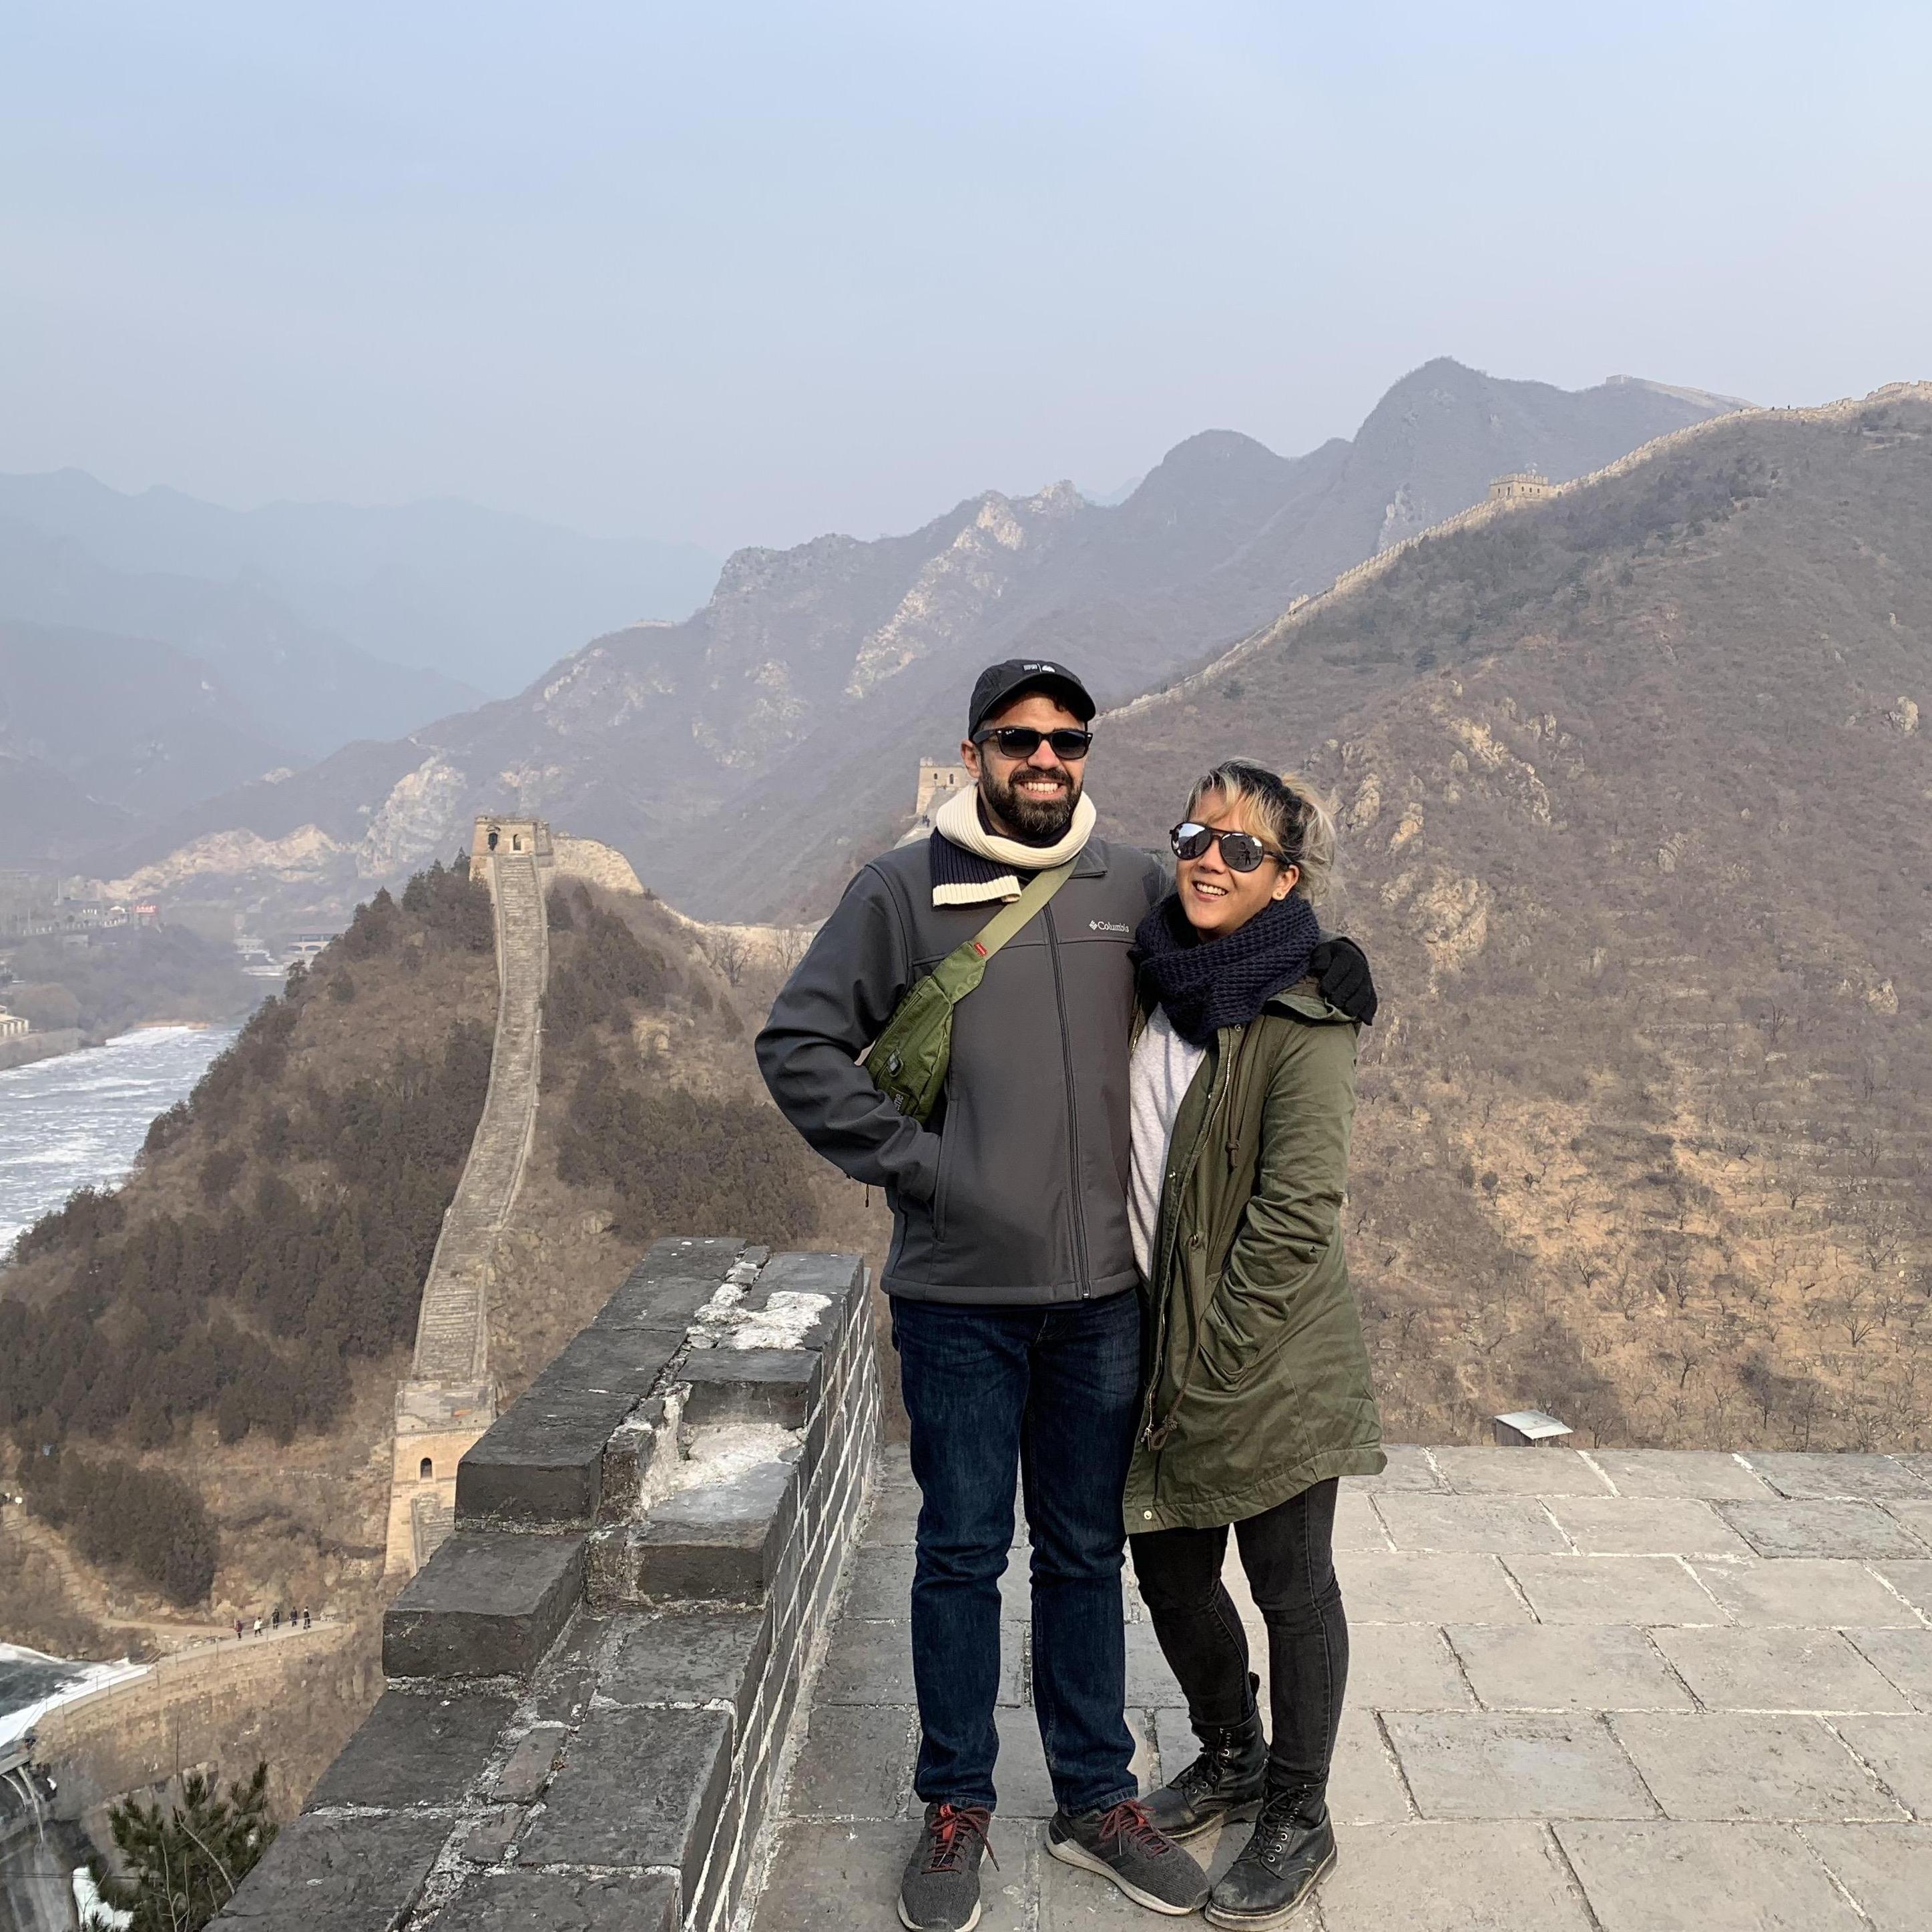 January 2020 - The Great Wall - Beijing, China